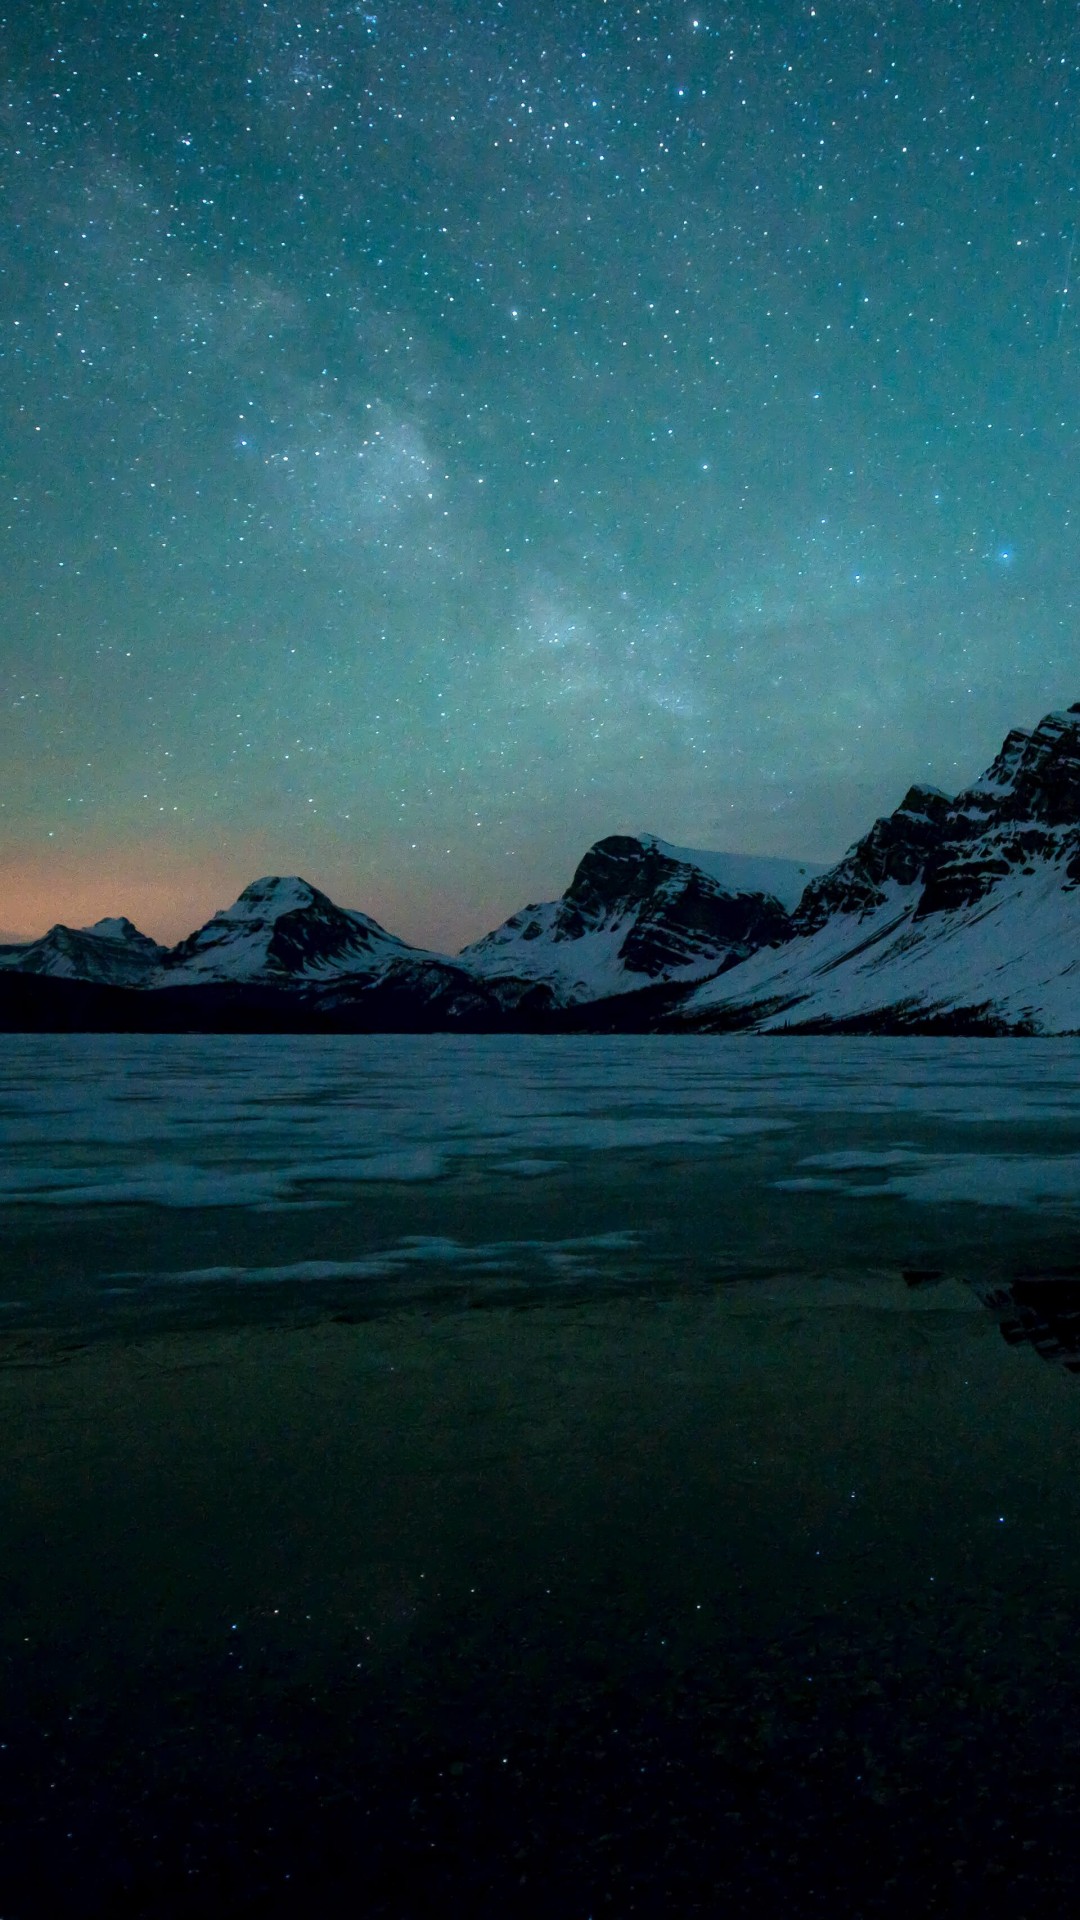 Milky Way over Bow Lake, Alberta, Canada Wallpaper for SAMSUNG Galaxy S5